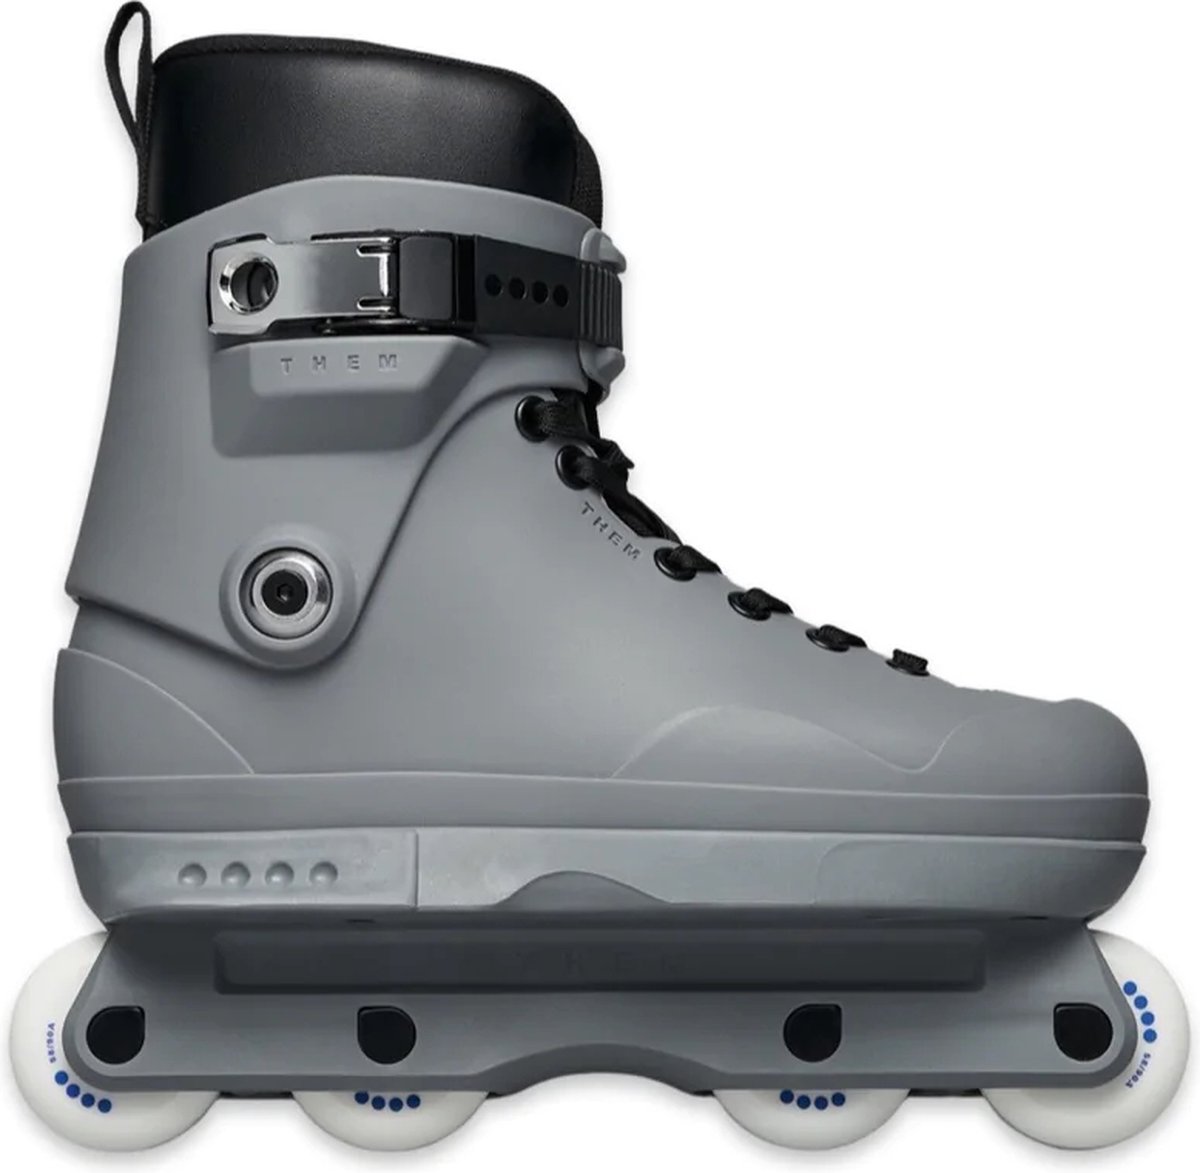 THEM 909 grey agressive inline skates 2022